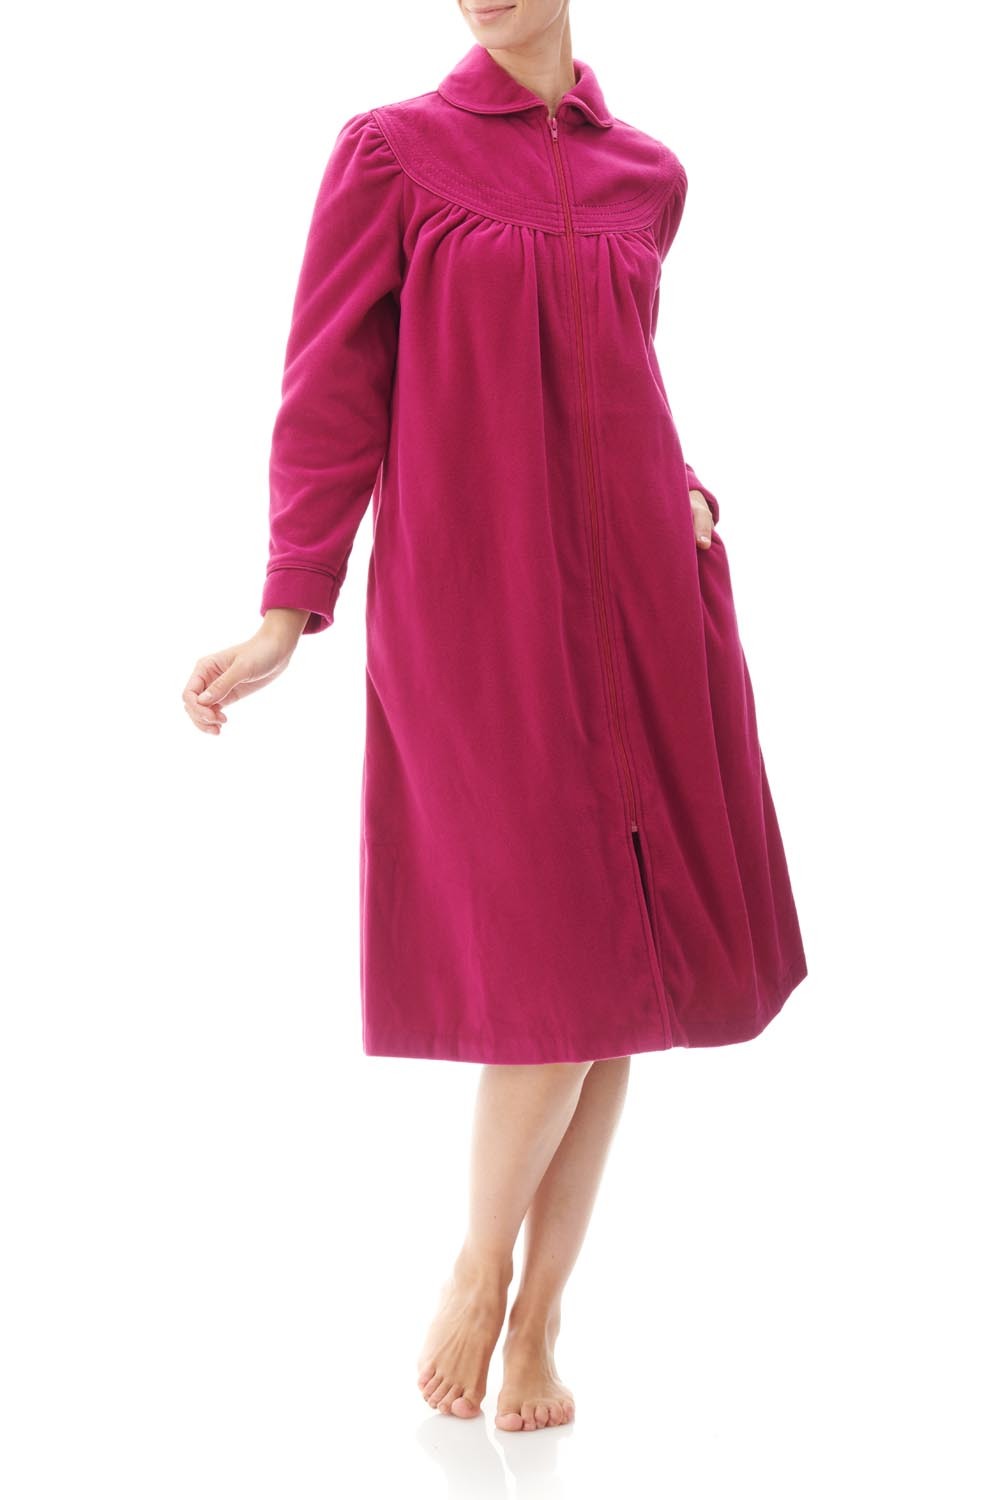 Miss Elaine Petite Size Floral Interlock Knit 3/4 Sleeve Long Zip-Front Robe  | Dillard's